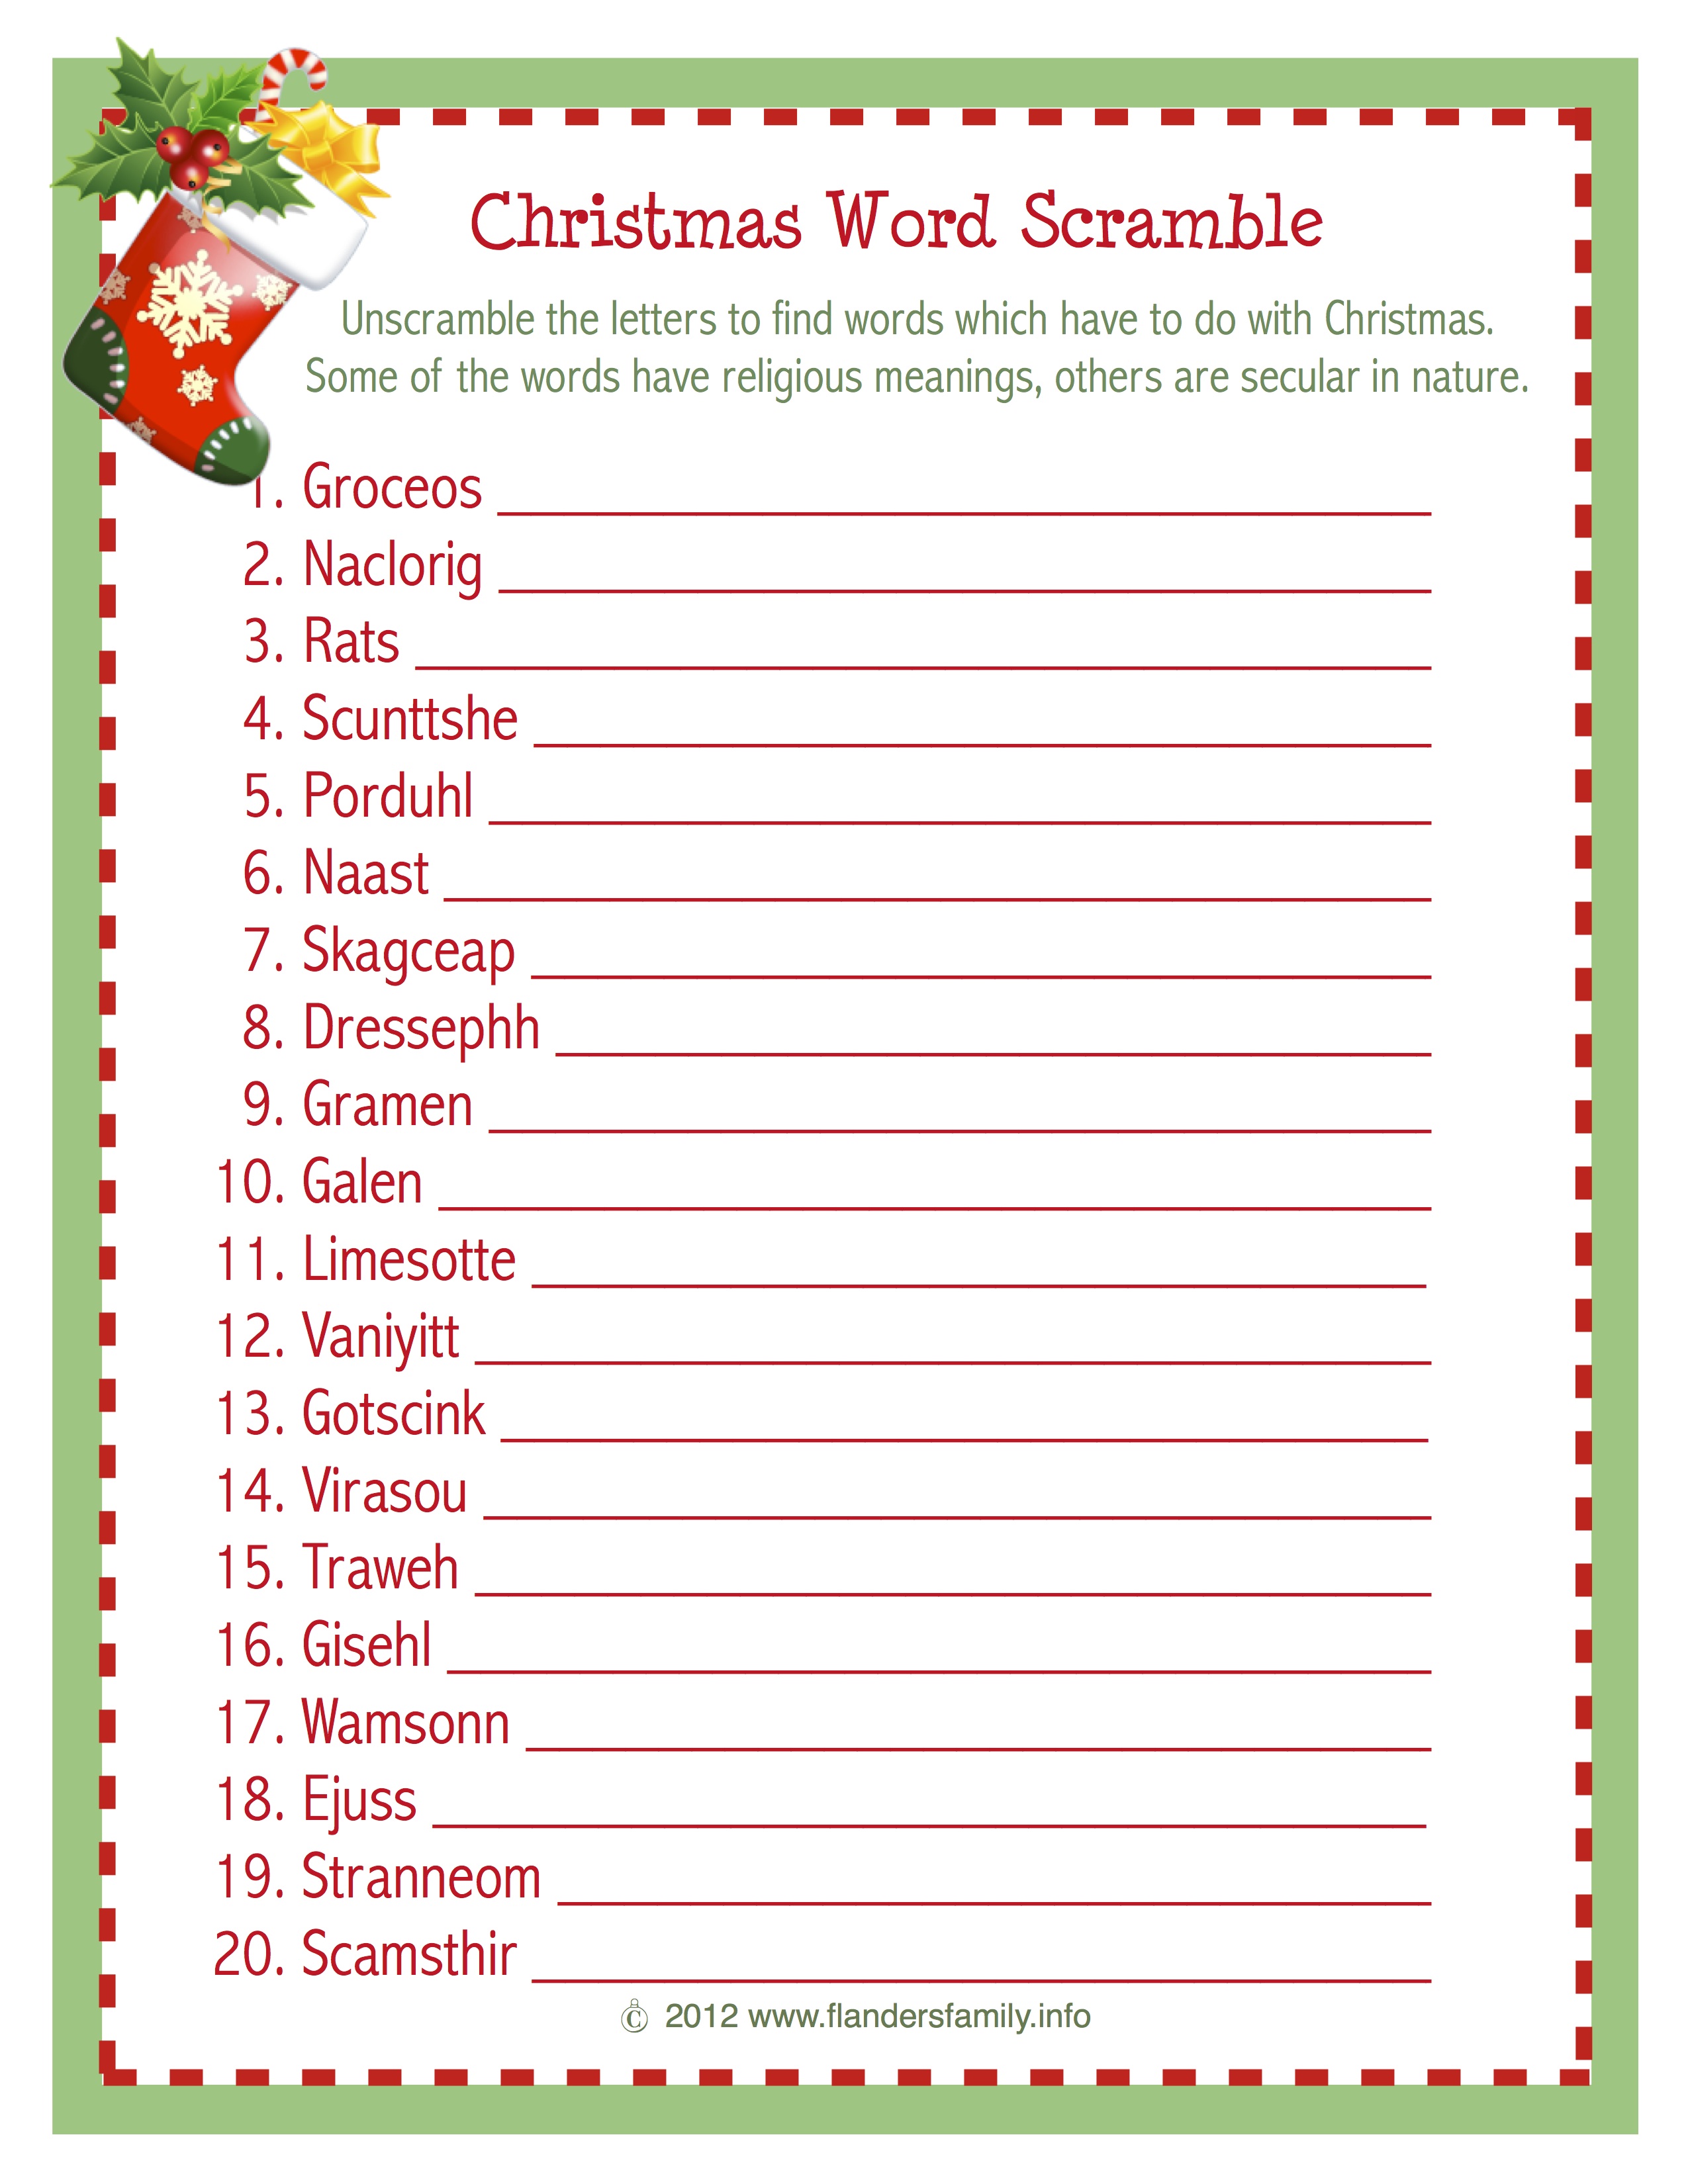 Christmas Word Scramble (Free Printable)